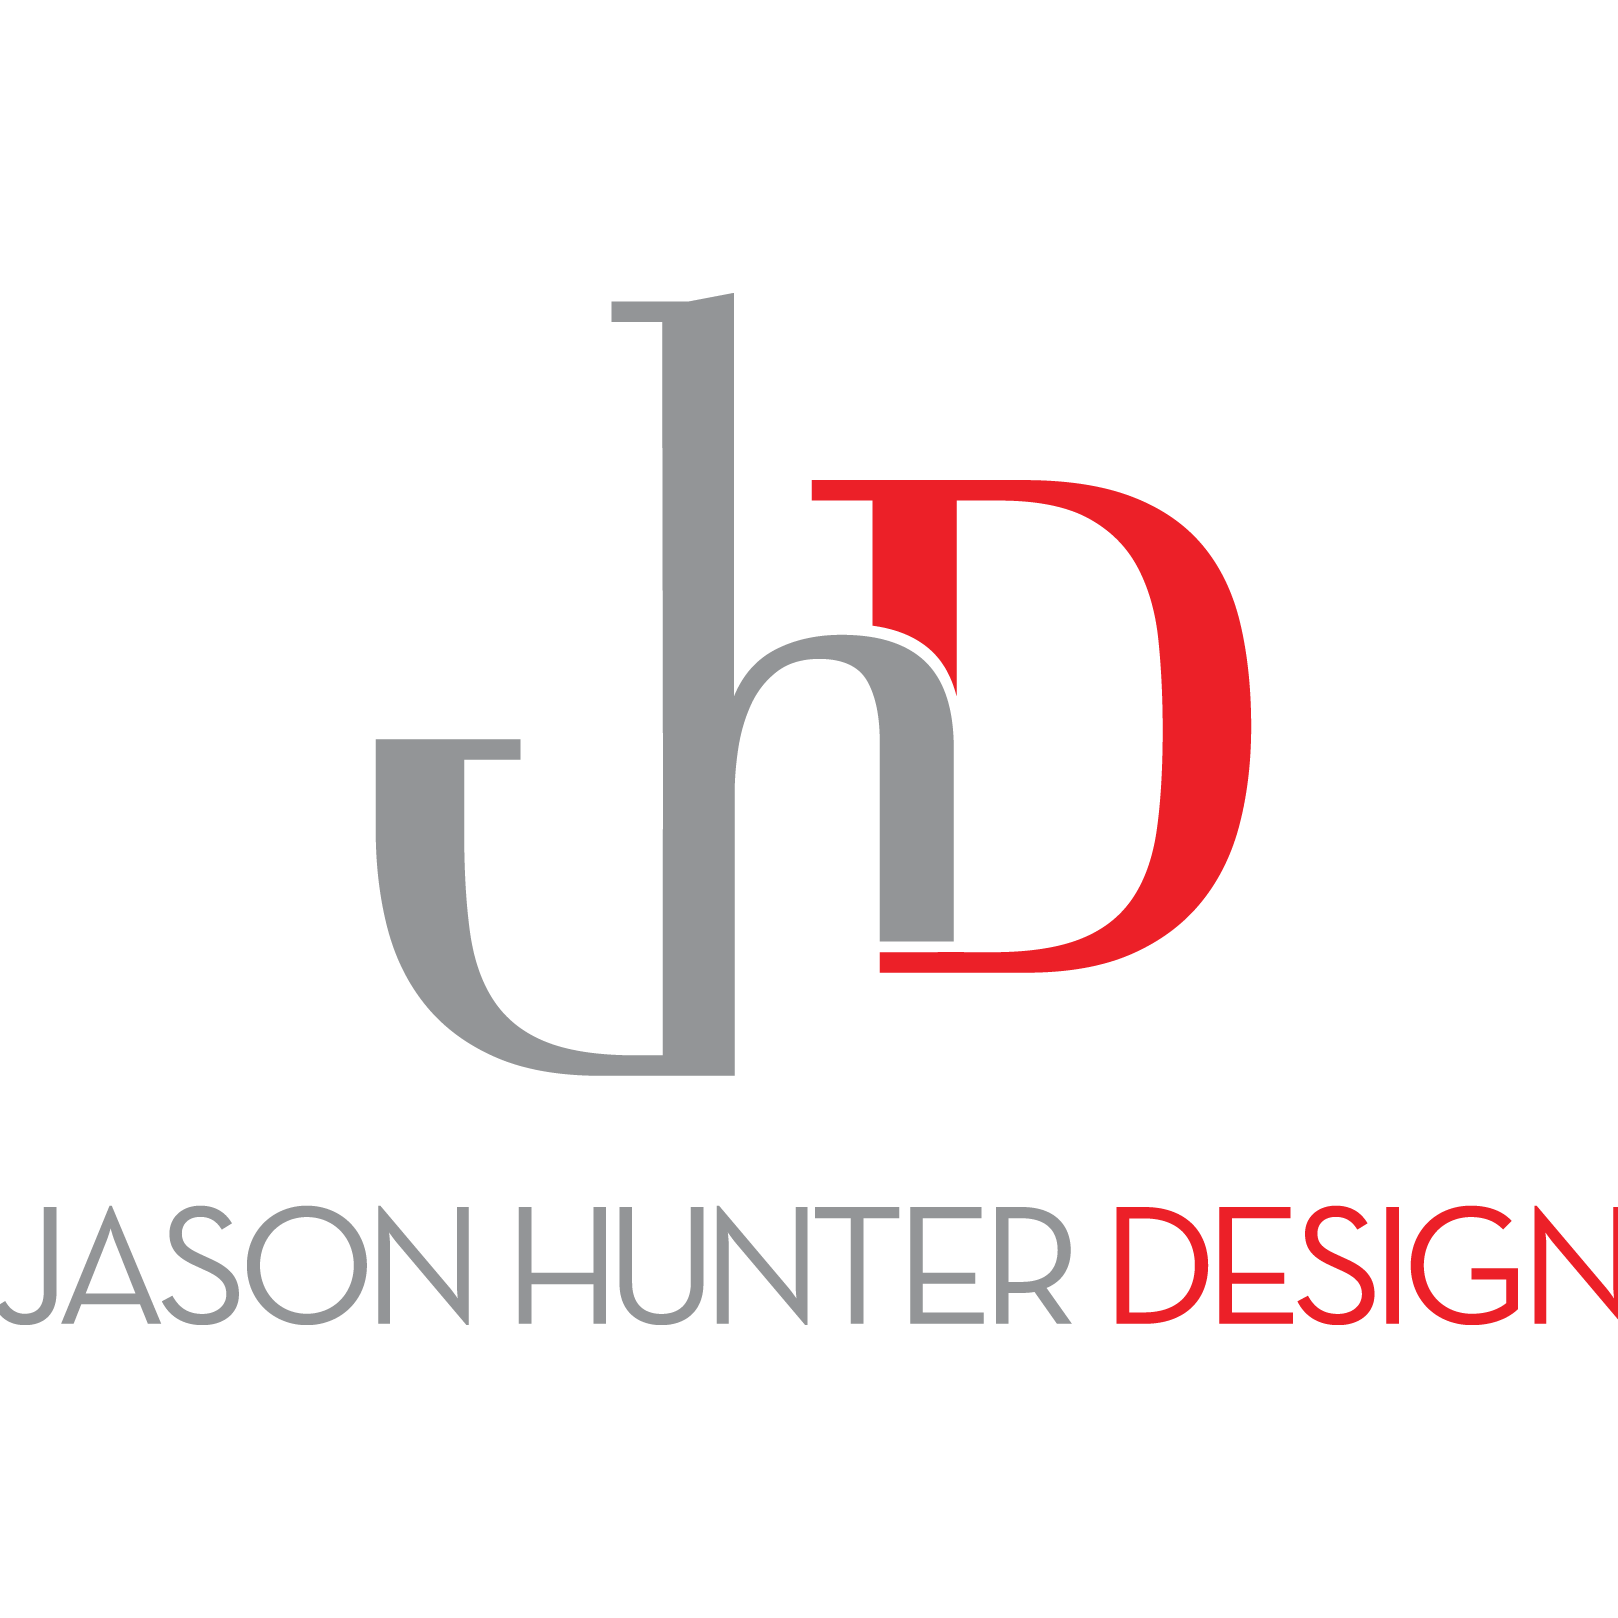 Jason Hunter Design